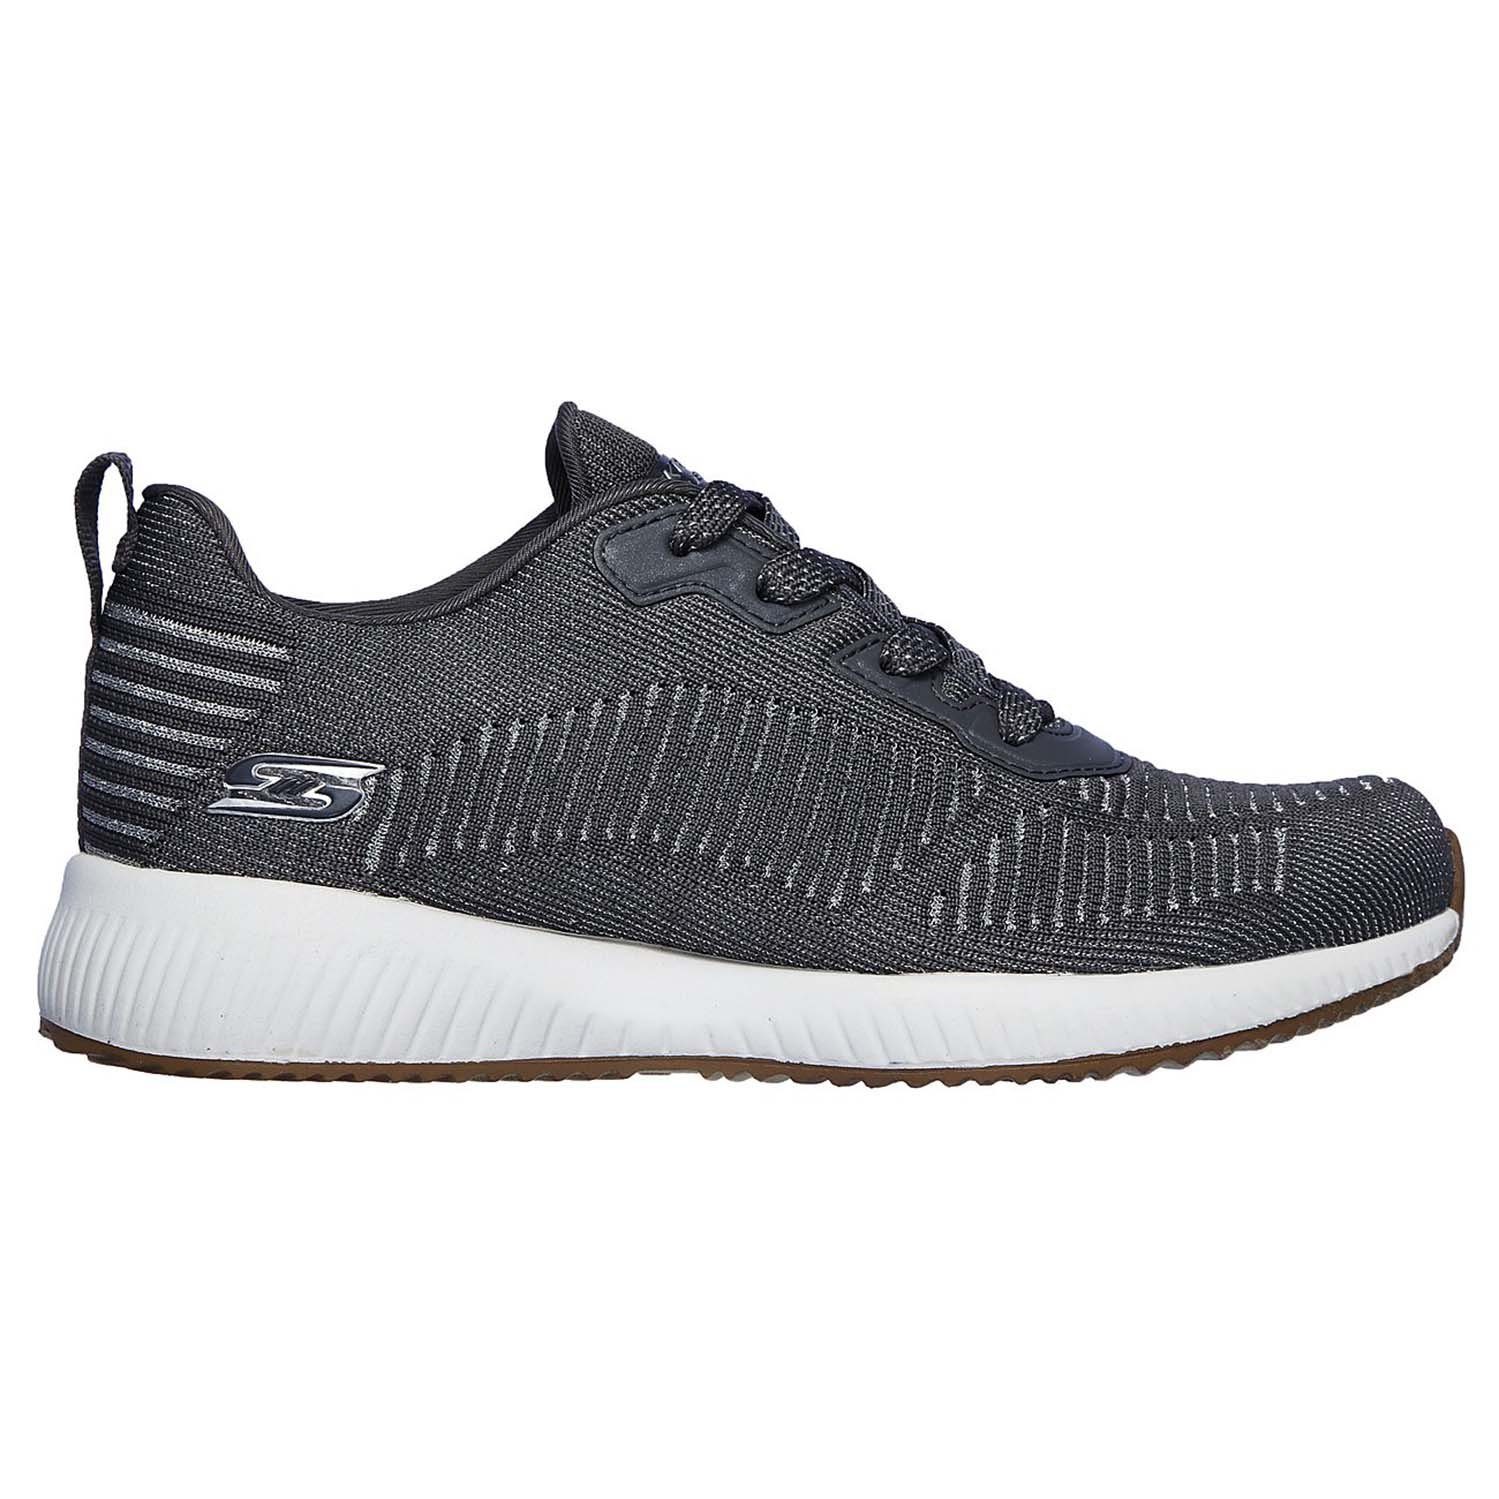 Silver) SQUAD Sneaker Grau (Grey (20202164) LEAGUE Skechers BOBS GLAM